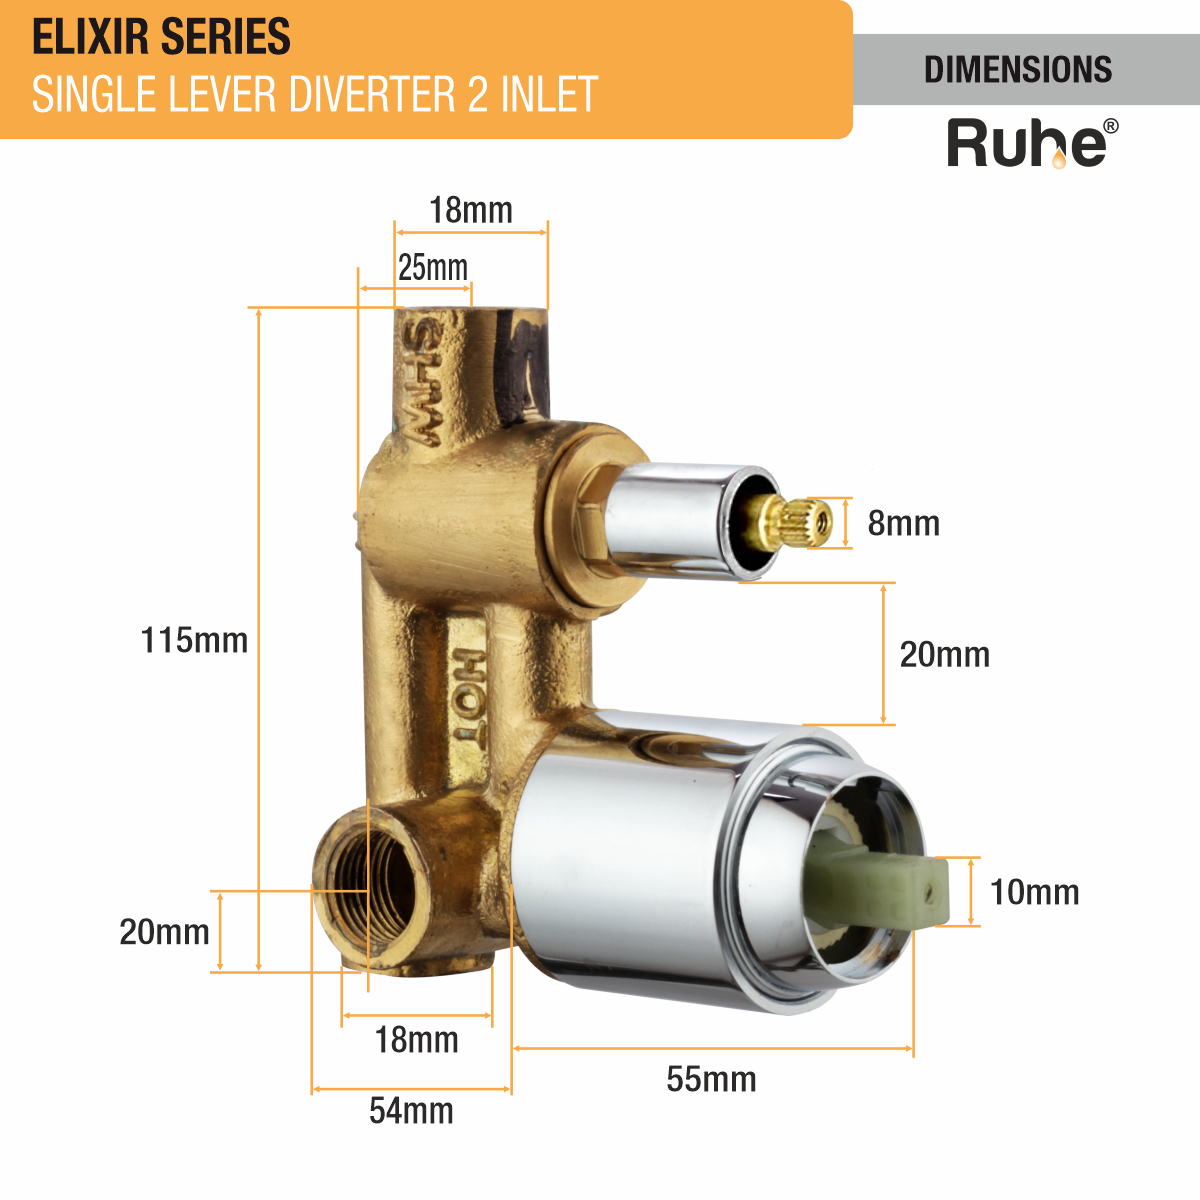 Elixir Single Lever 2-inlet Diverter (Complete Set) dimensions and size